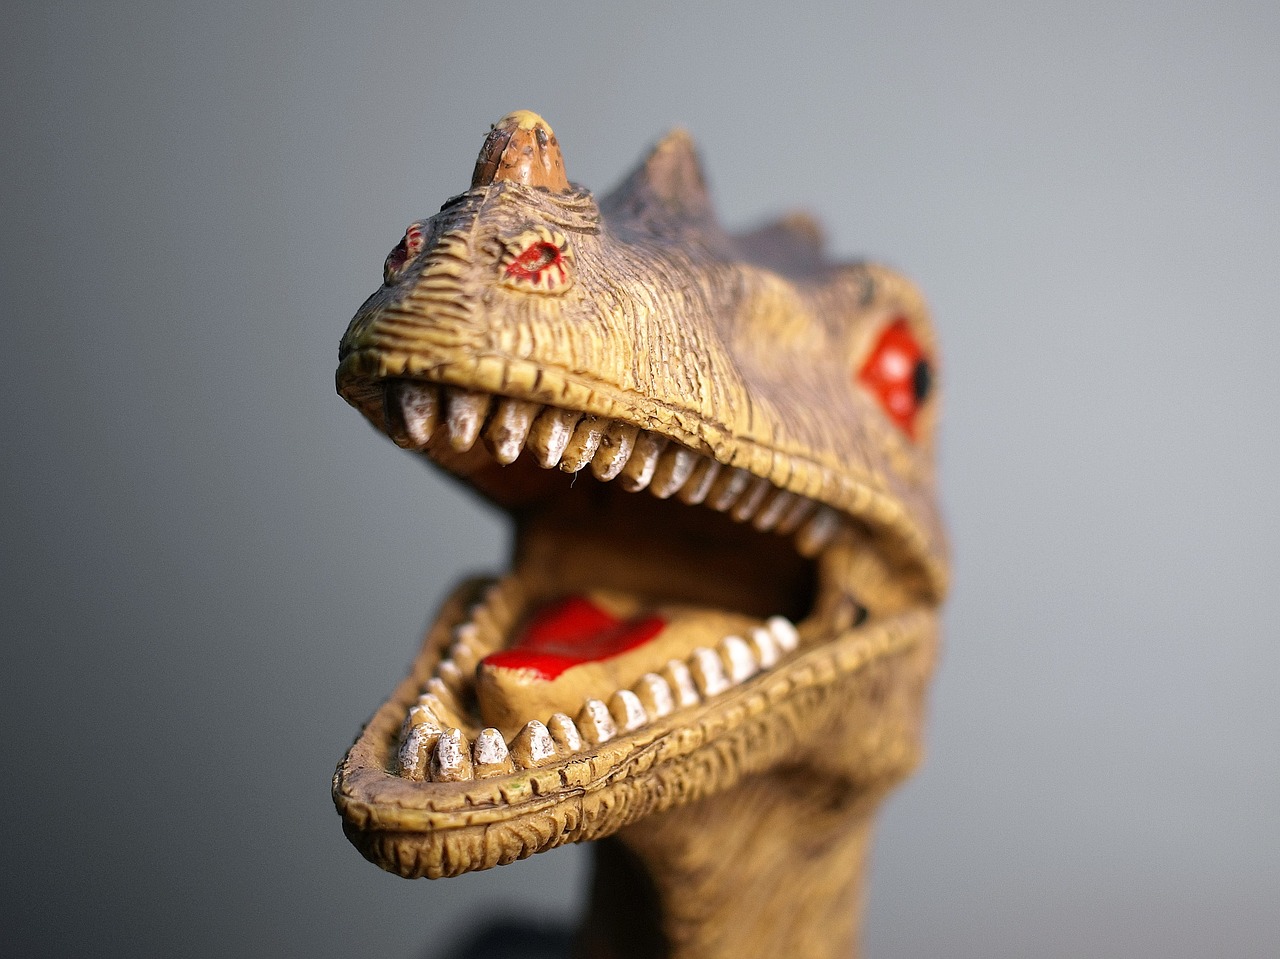 close-up dinosaur toy figurine free photo